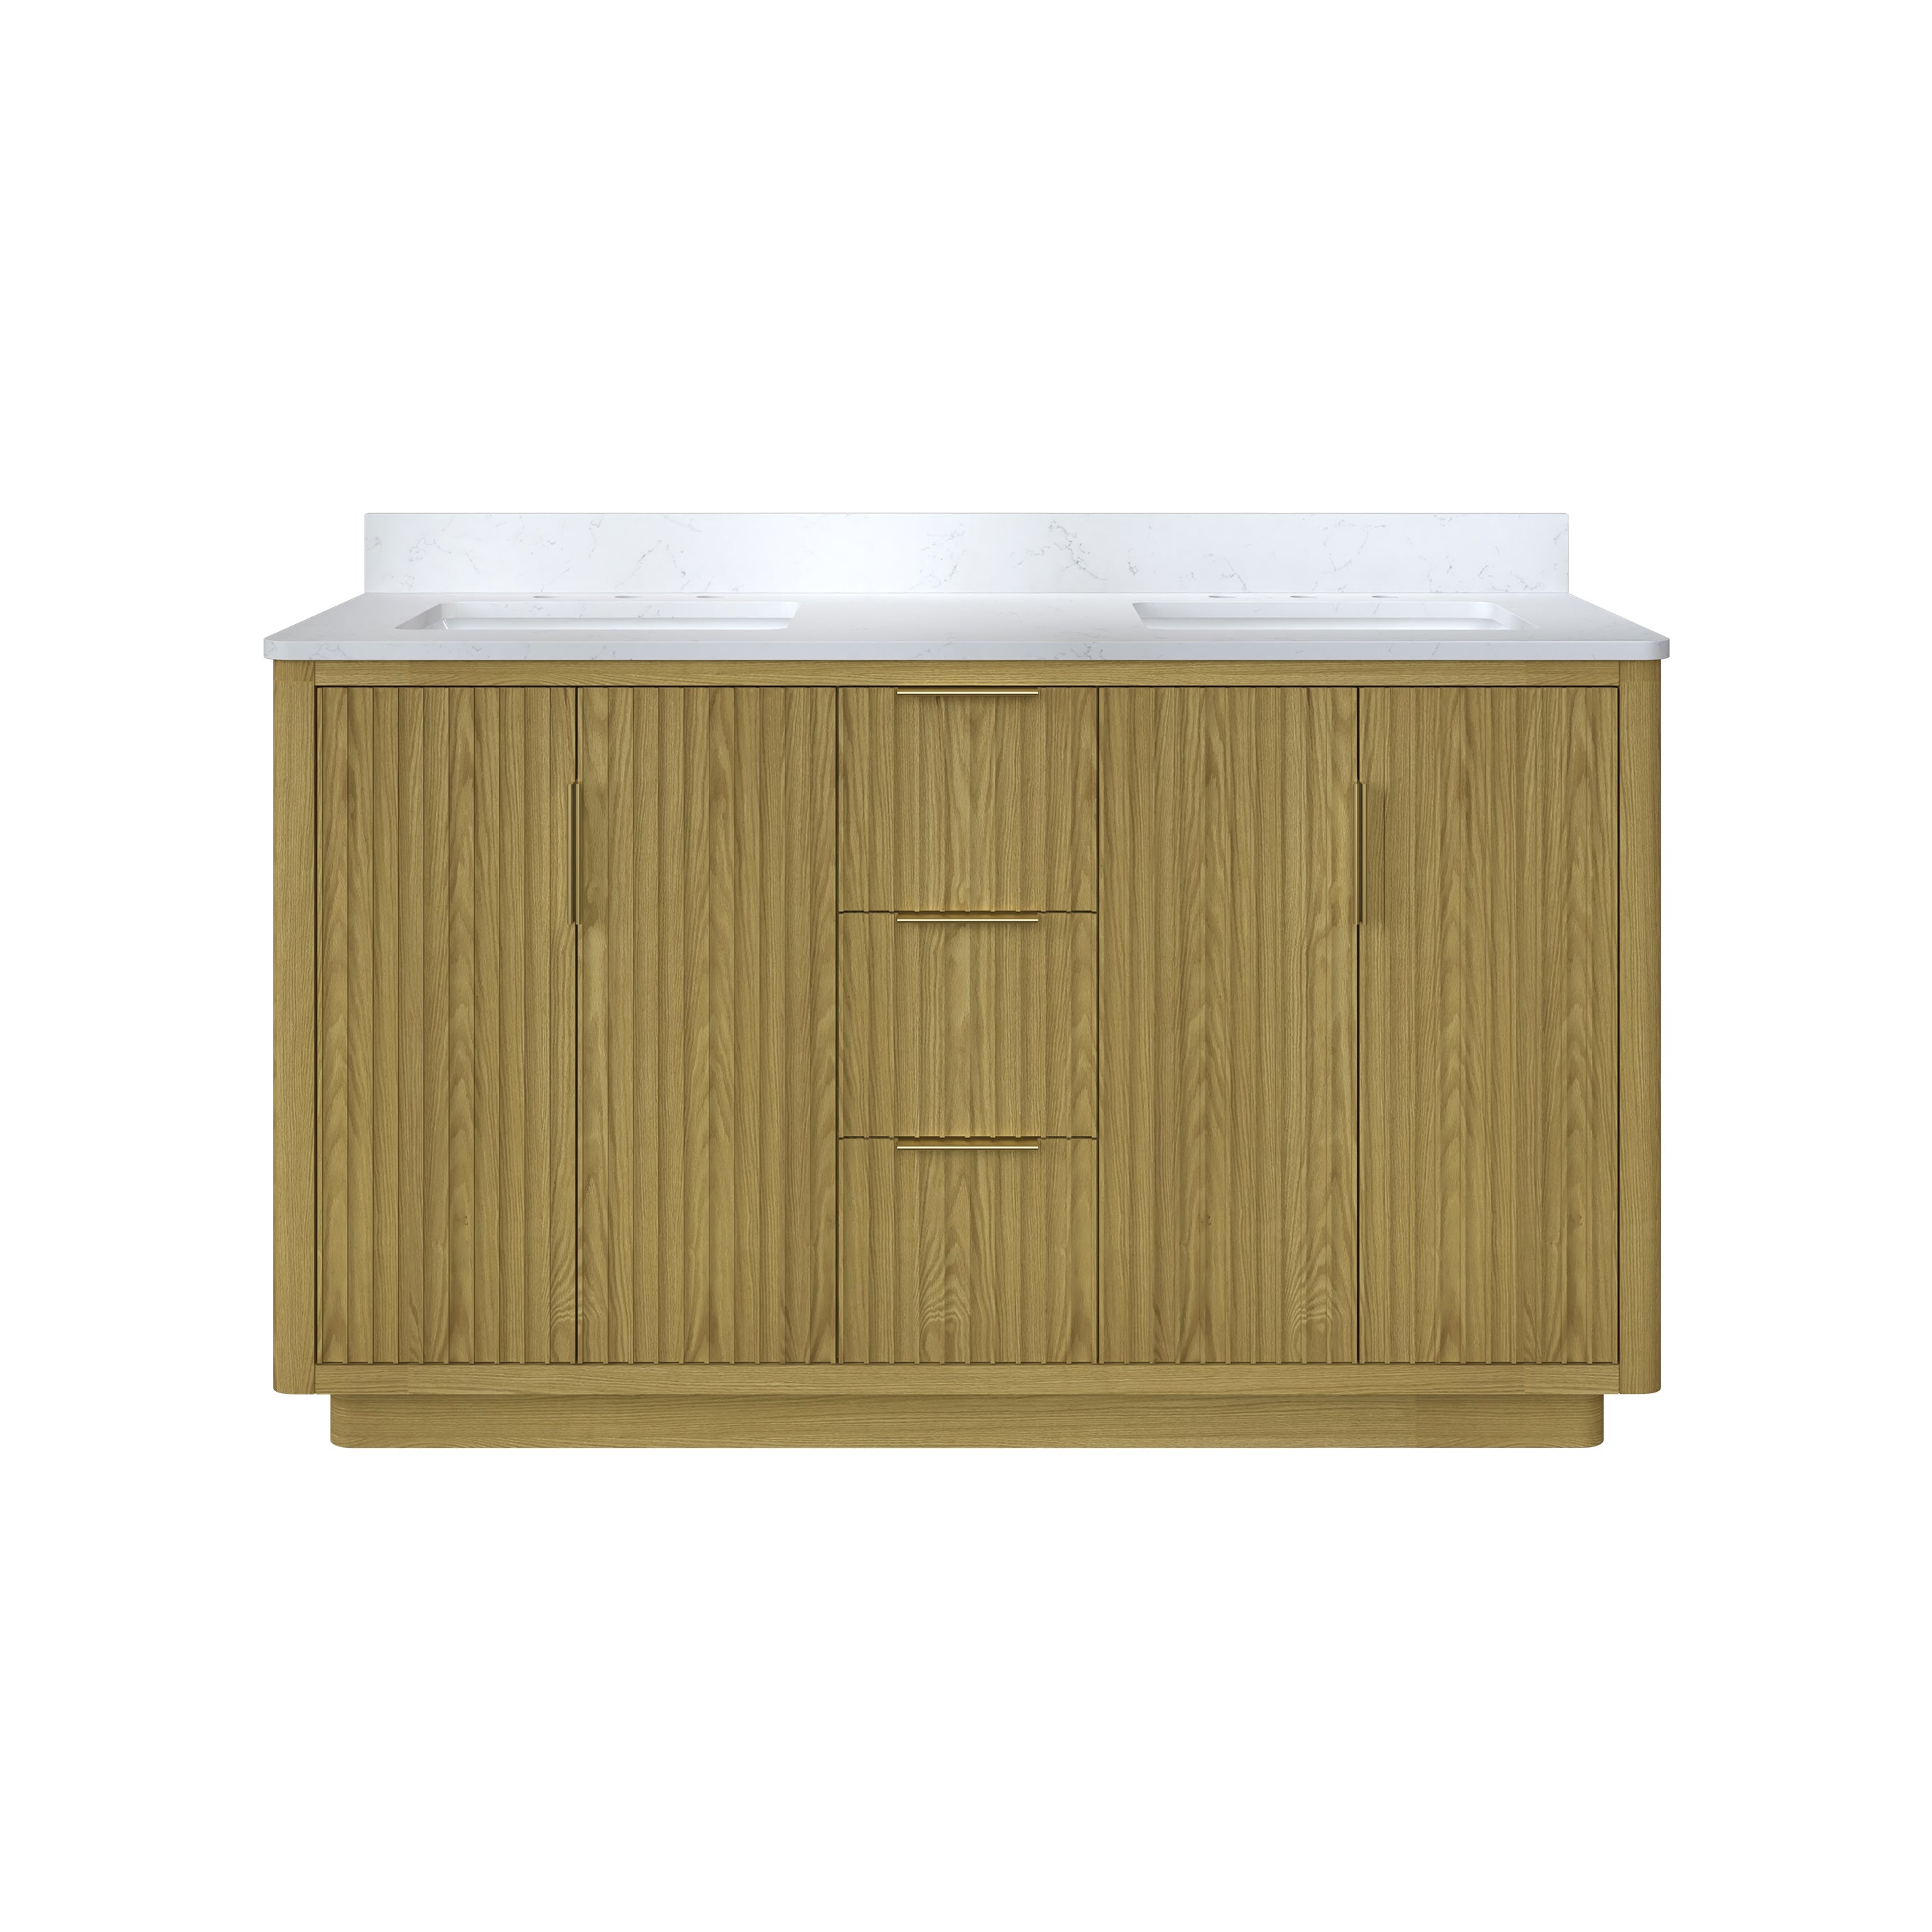 60 in. Oak Freestanding Solid Wood Bathroom Vanity with White Quartz Countertop